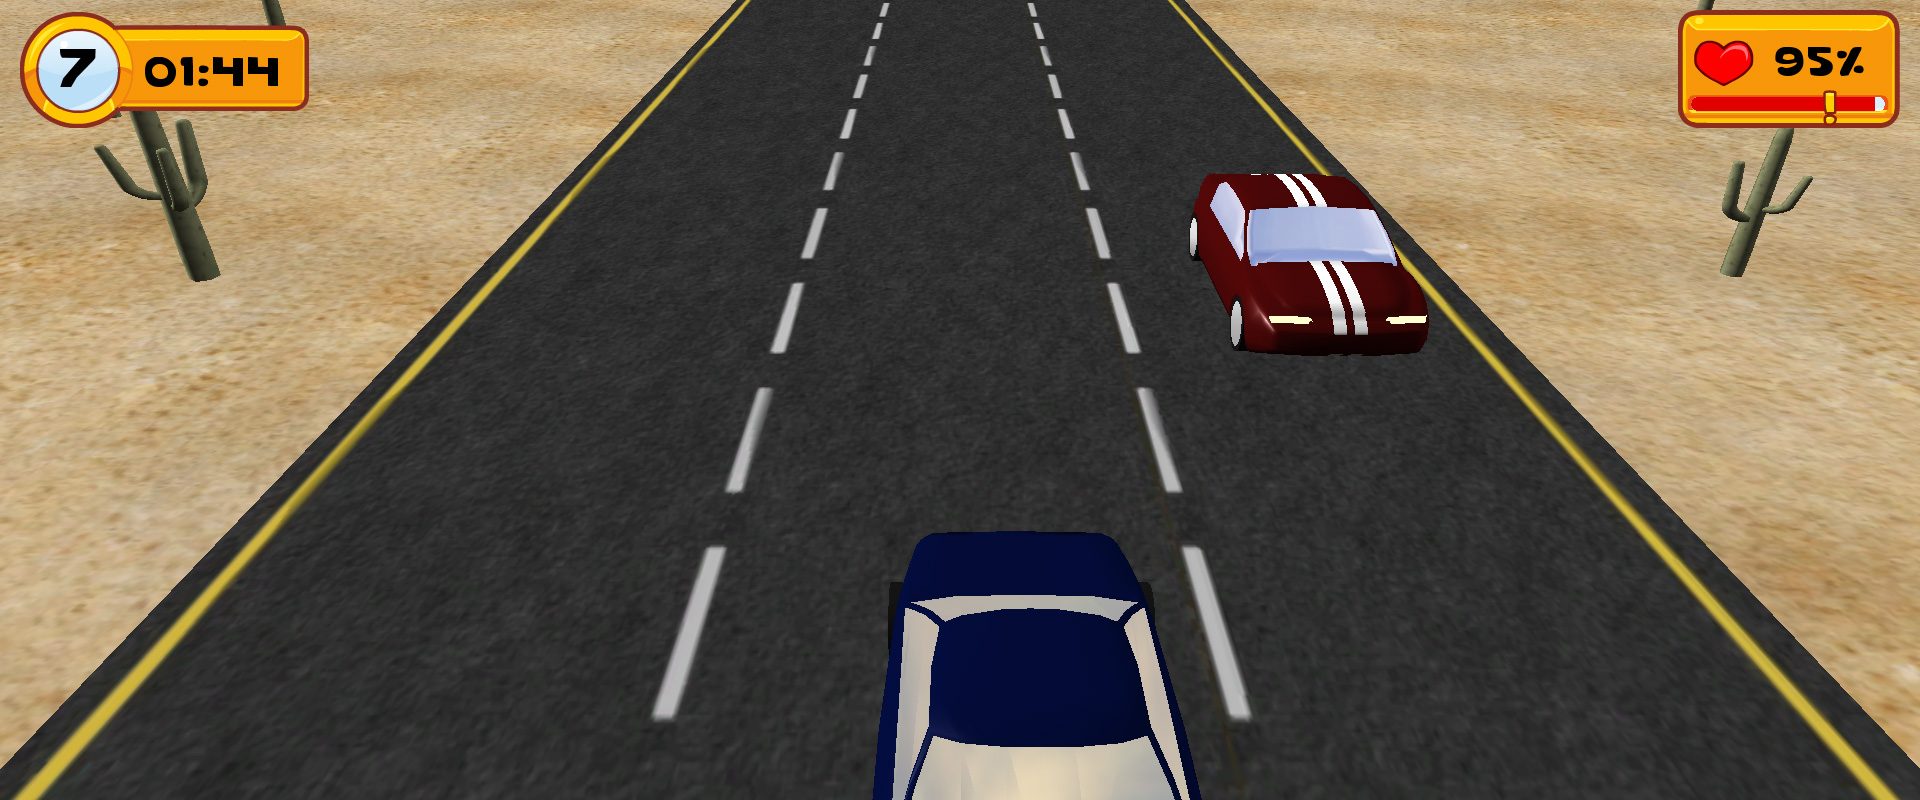 Game Screen Highway